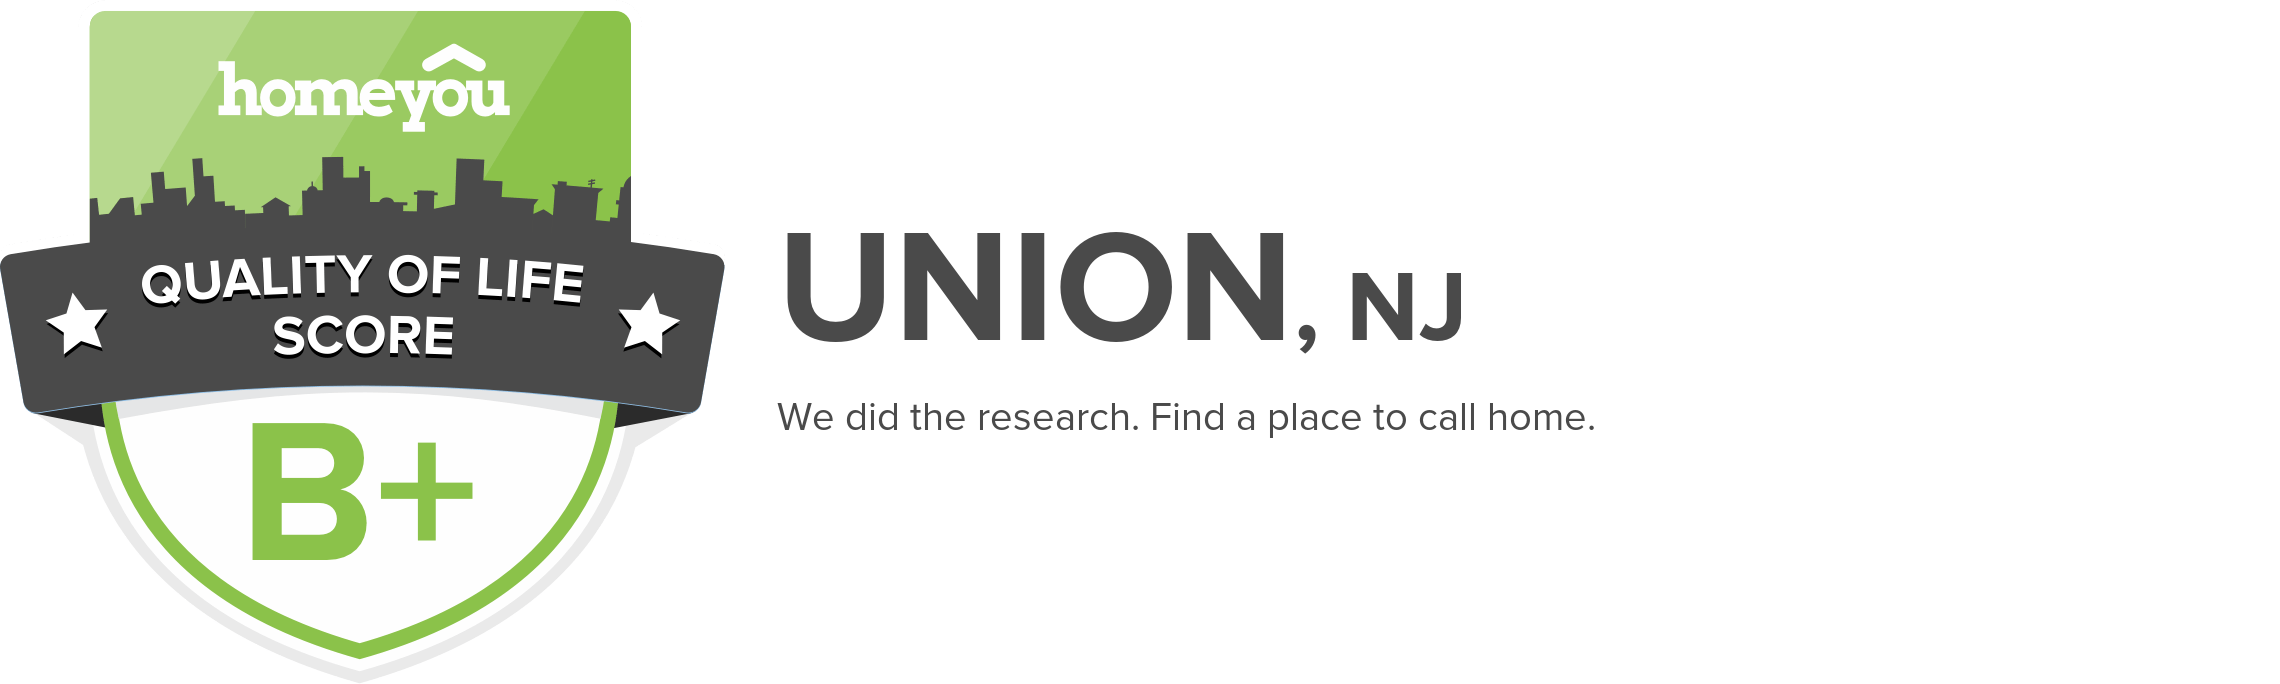 Union, NJ